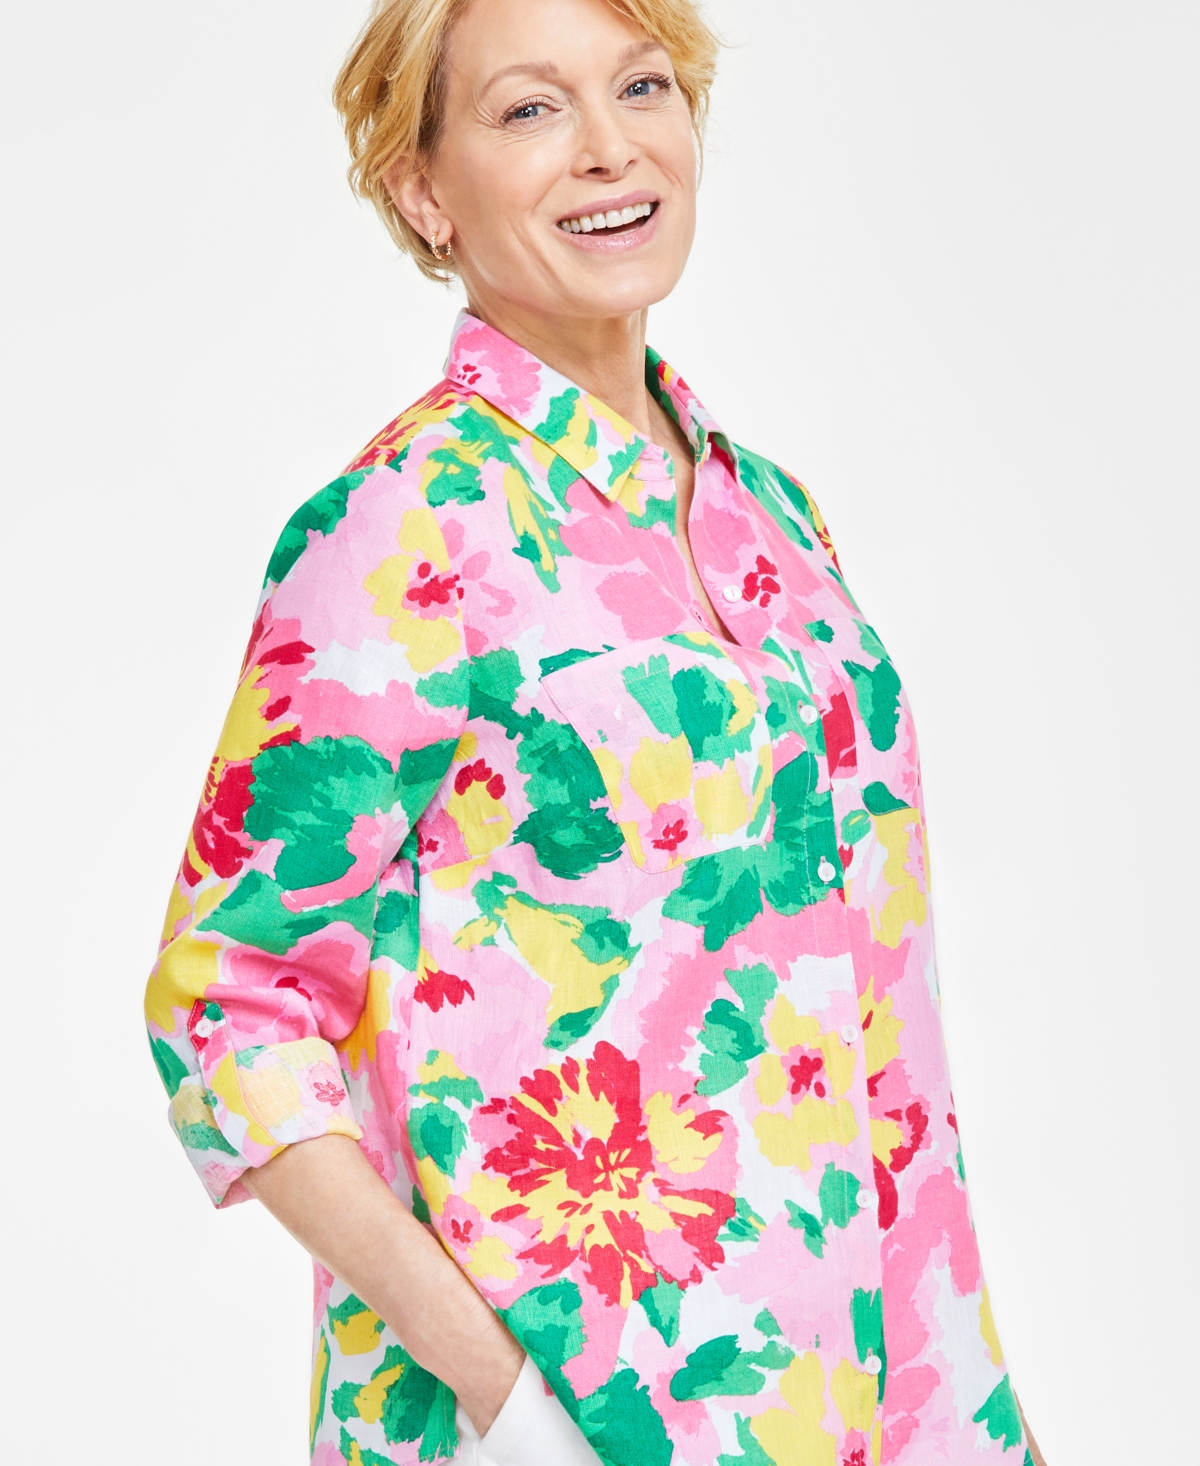 Women's 100% Linen Garden Blur Printed Shirt, Created for Macy's - Bubble Bath Combo